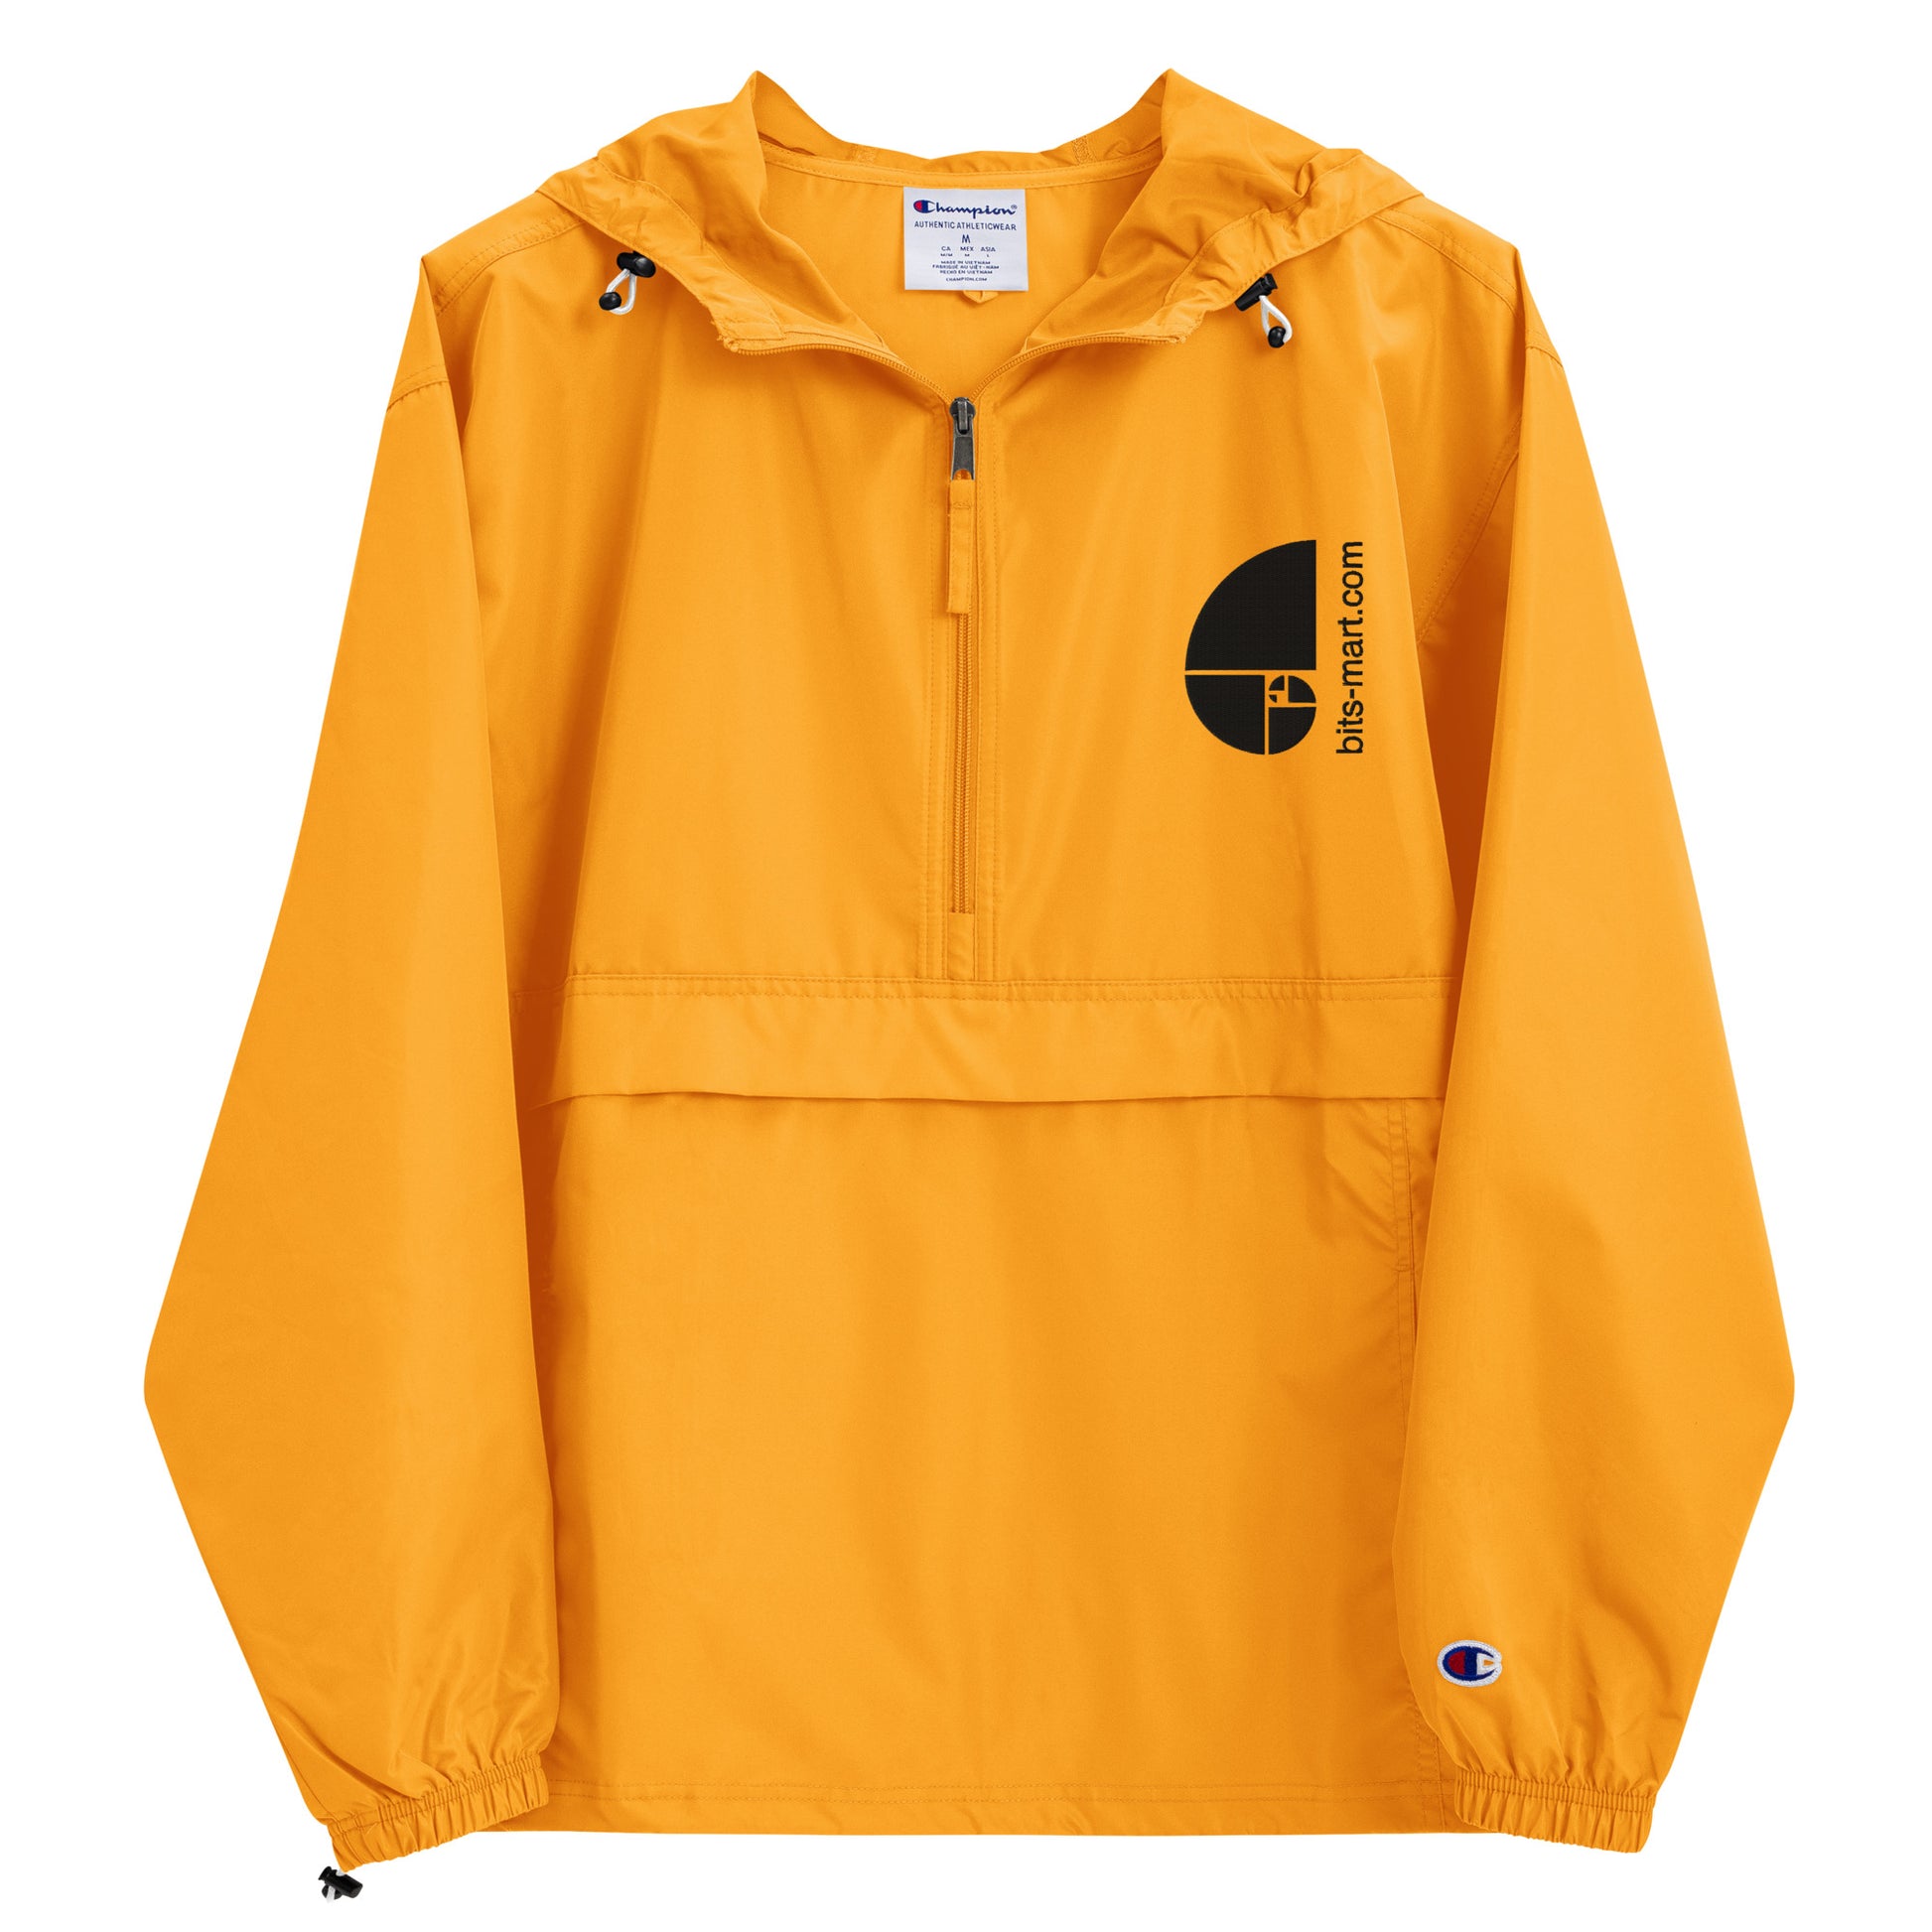 Embroidered Champion Packable Jacket — Orange